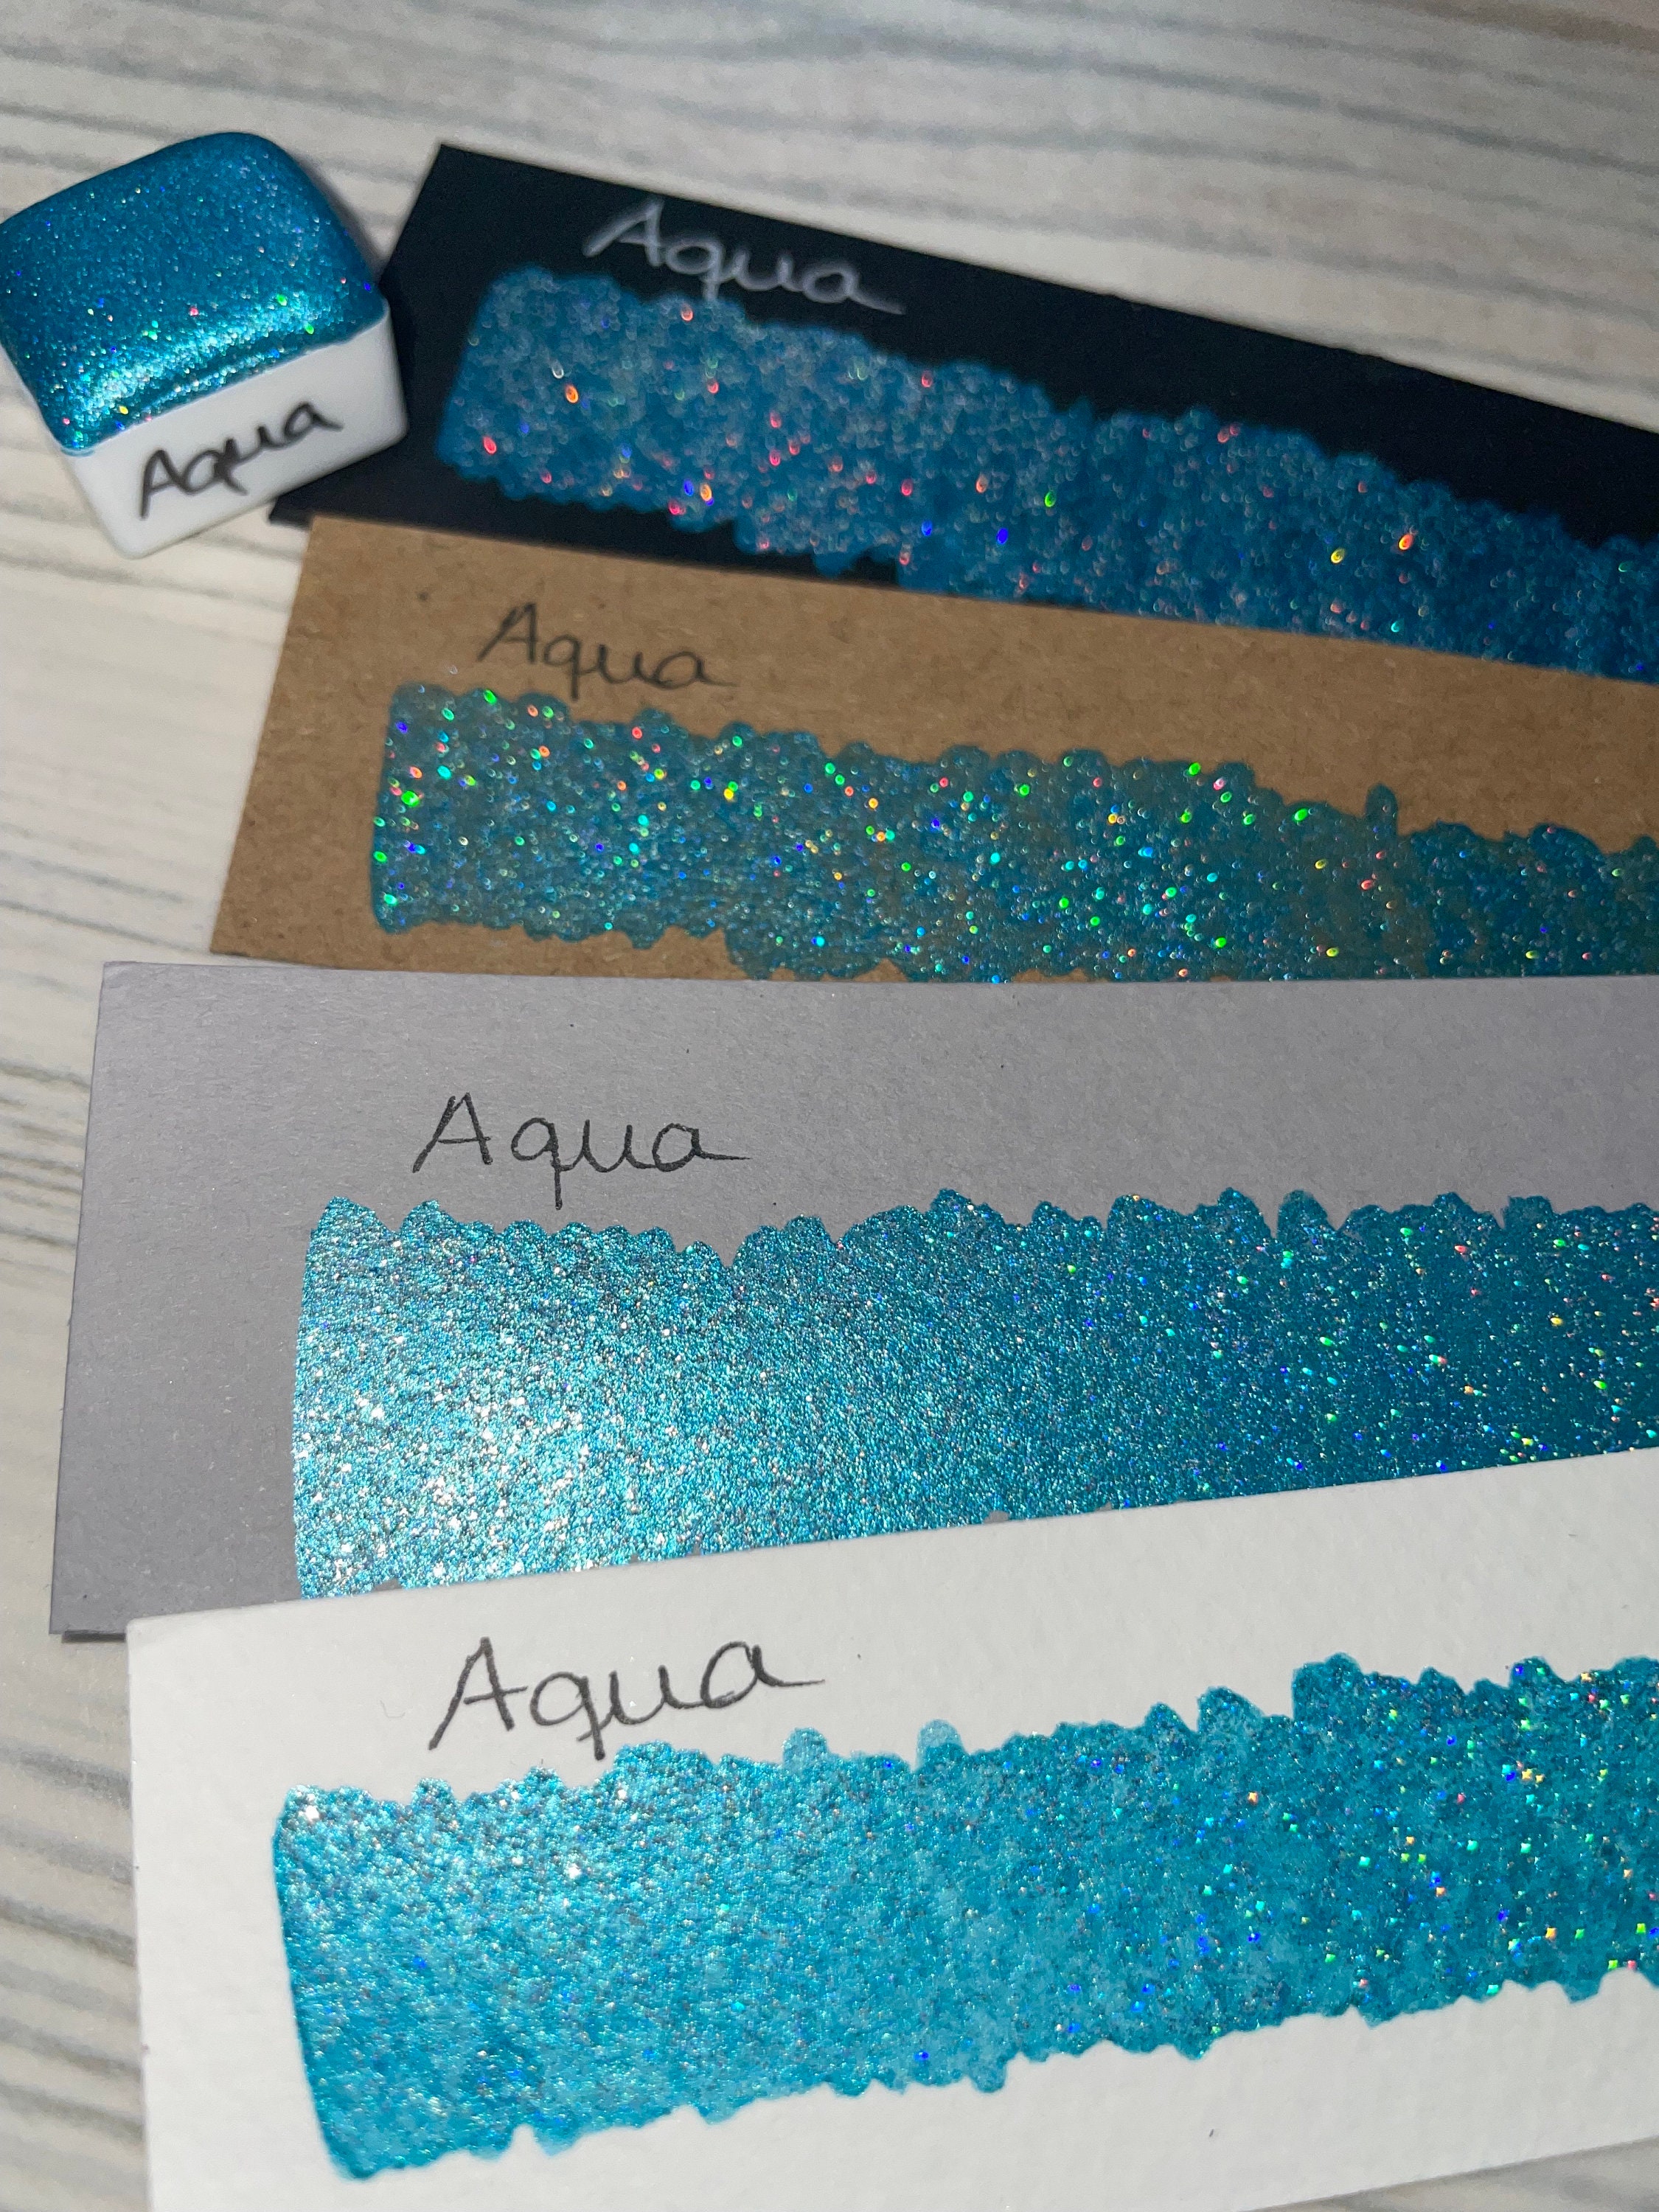 59ml Galaxy Glitter, Aqua Meteor, Decoart, Glitter Paint, Aqua Glitter,  Paint on Acrylic, Water Based, Premium Glitter, 10 Colors, UK Shop 